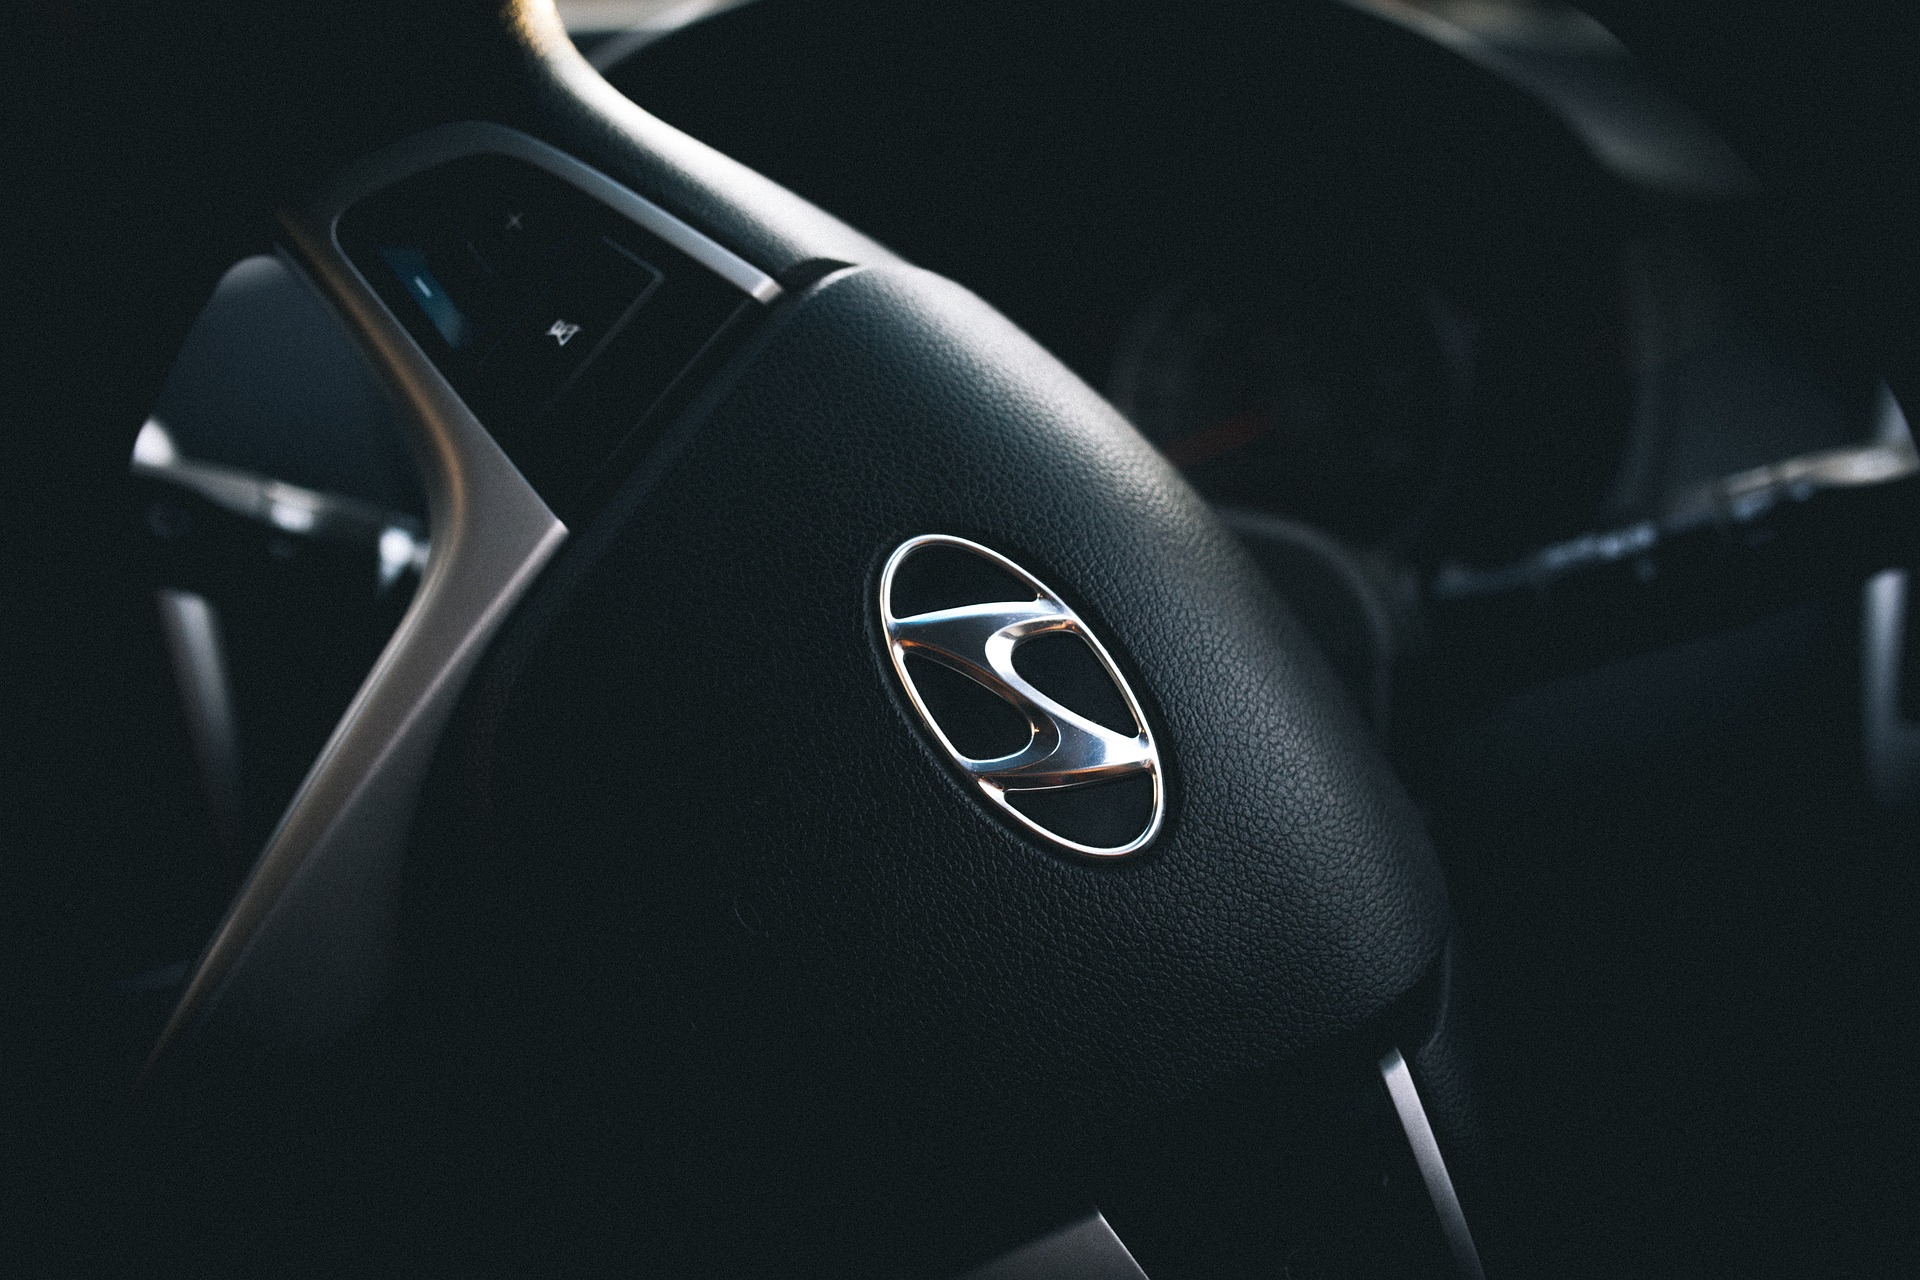 A Hyundai steering wheel